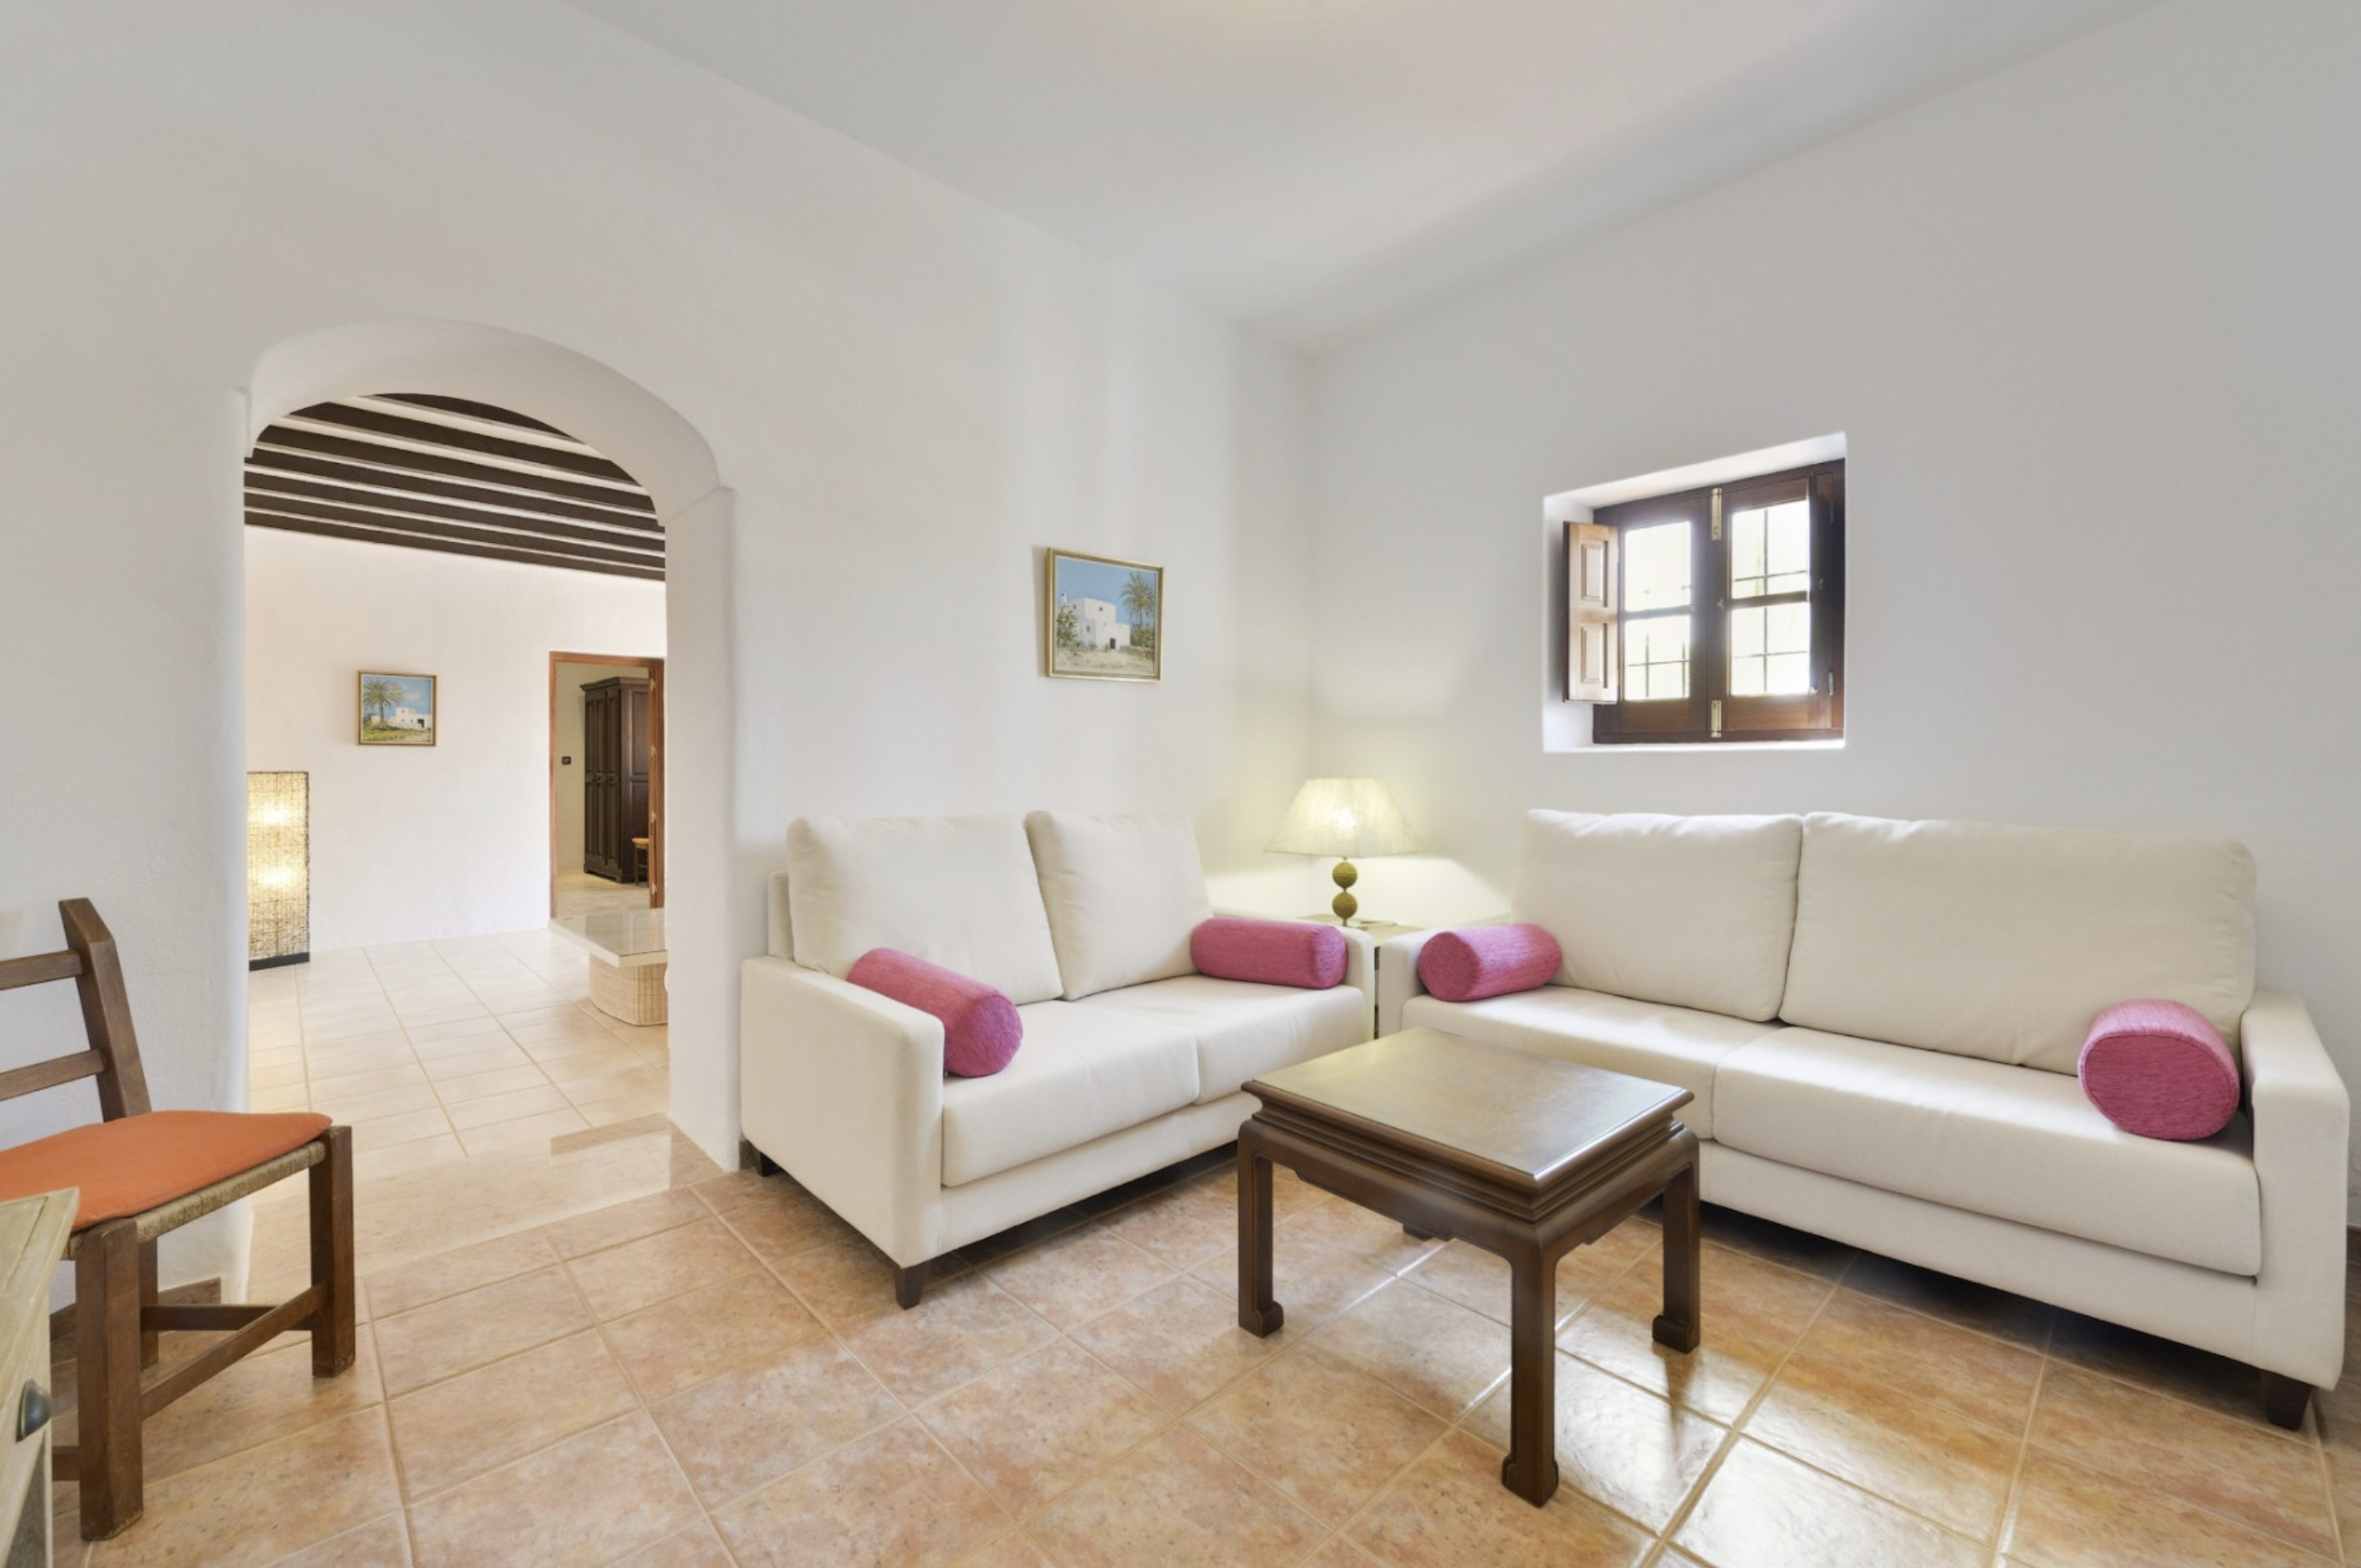 resa estates ibiza for rent villa santa eulalia 2021 can cosmi family house private pool 2nd living room.jpg